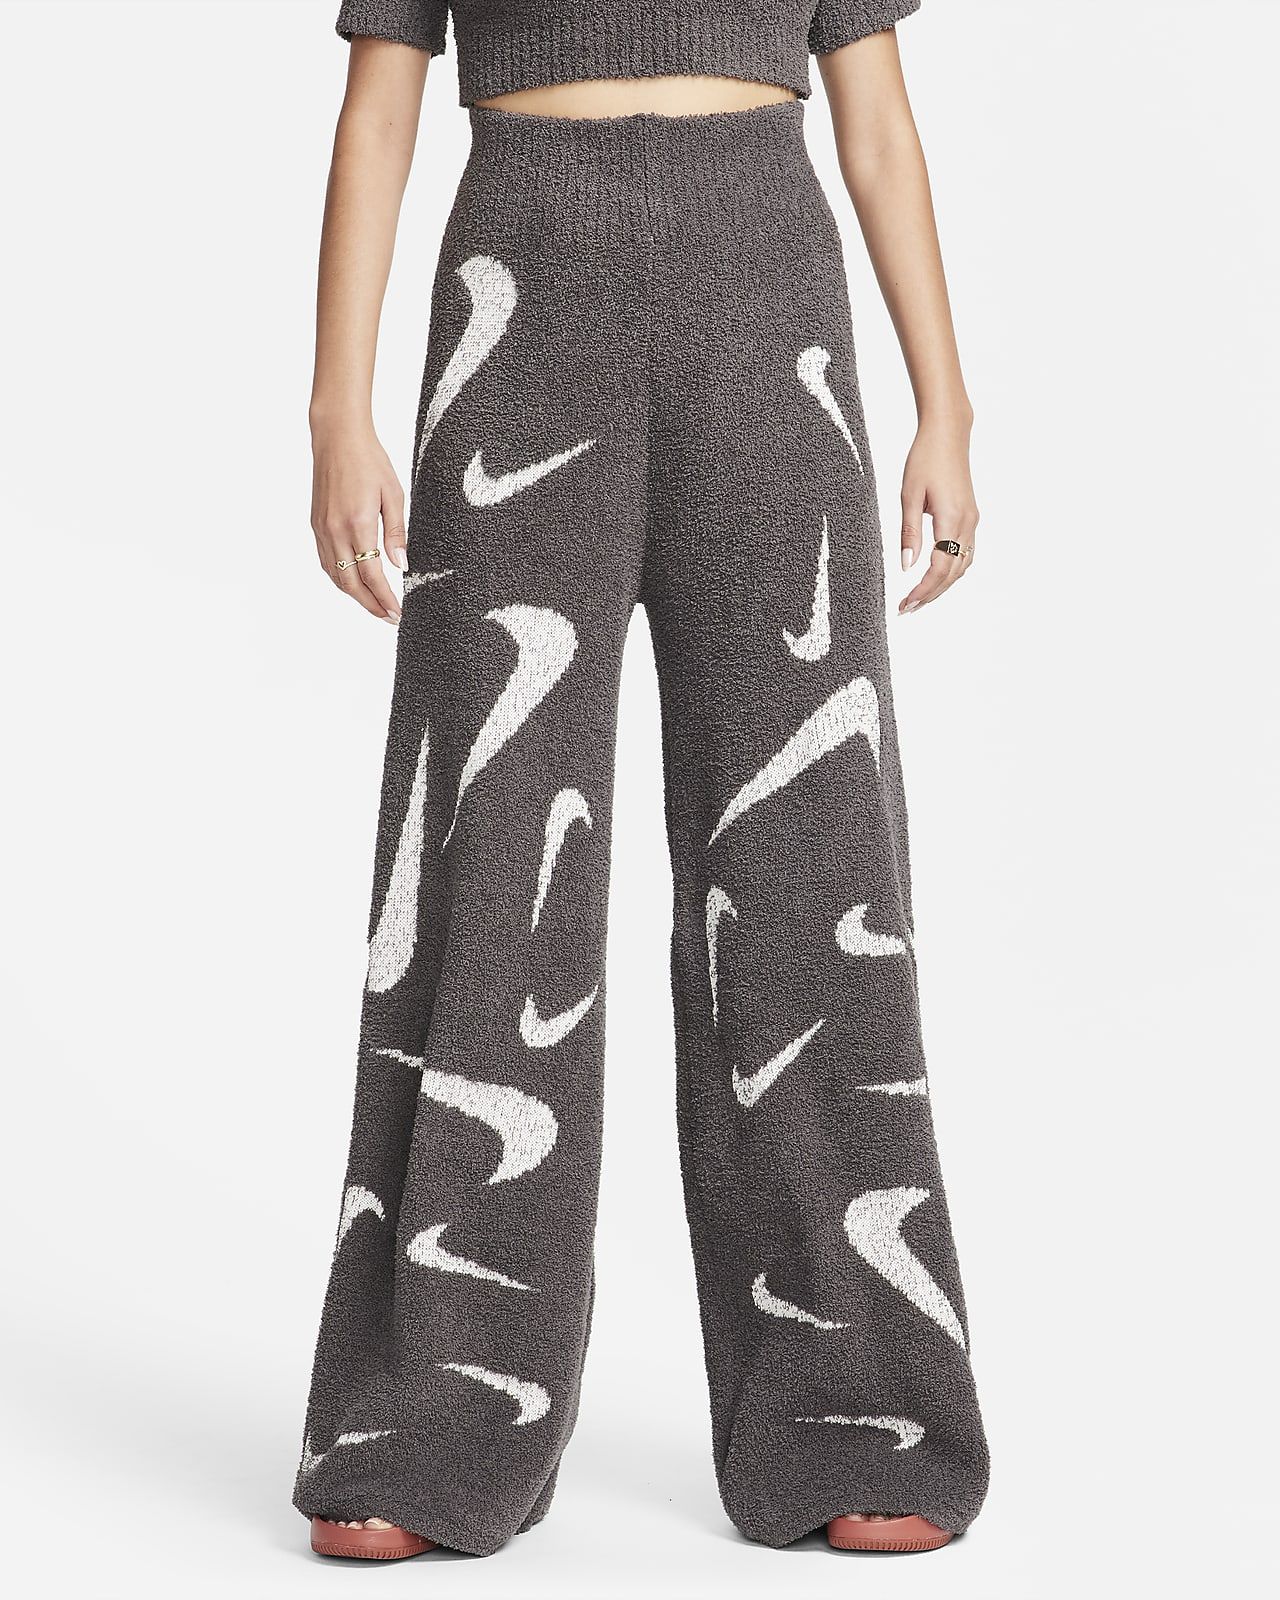 Nike Sportswear Phoenix Cozy Bouclé Women's High-Waisted Wide-Leg Knit Pants. Nike.com | Nike (US)